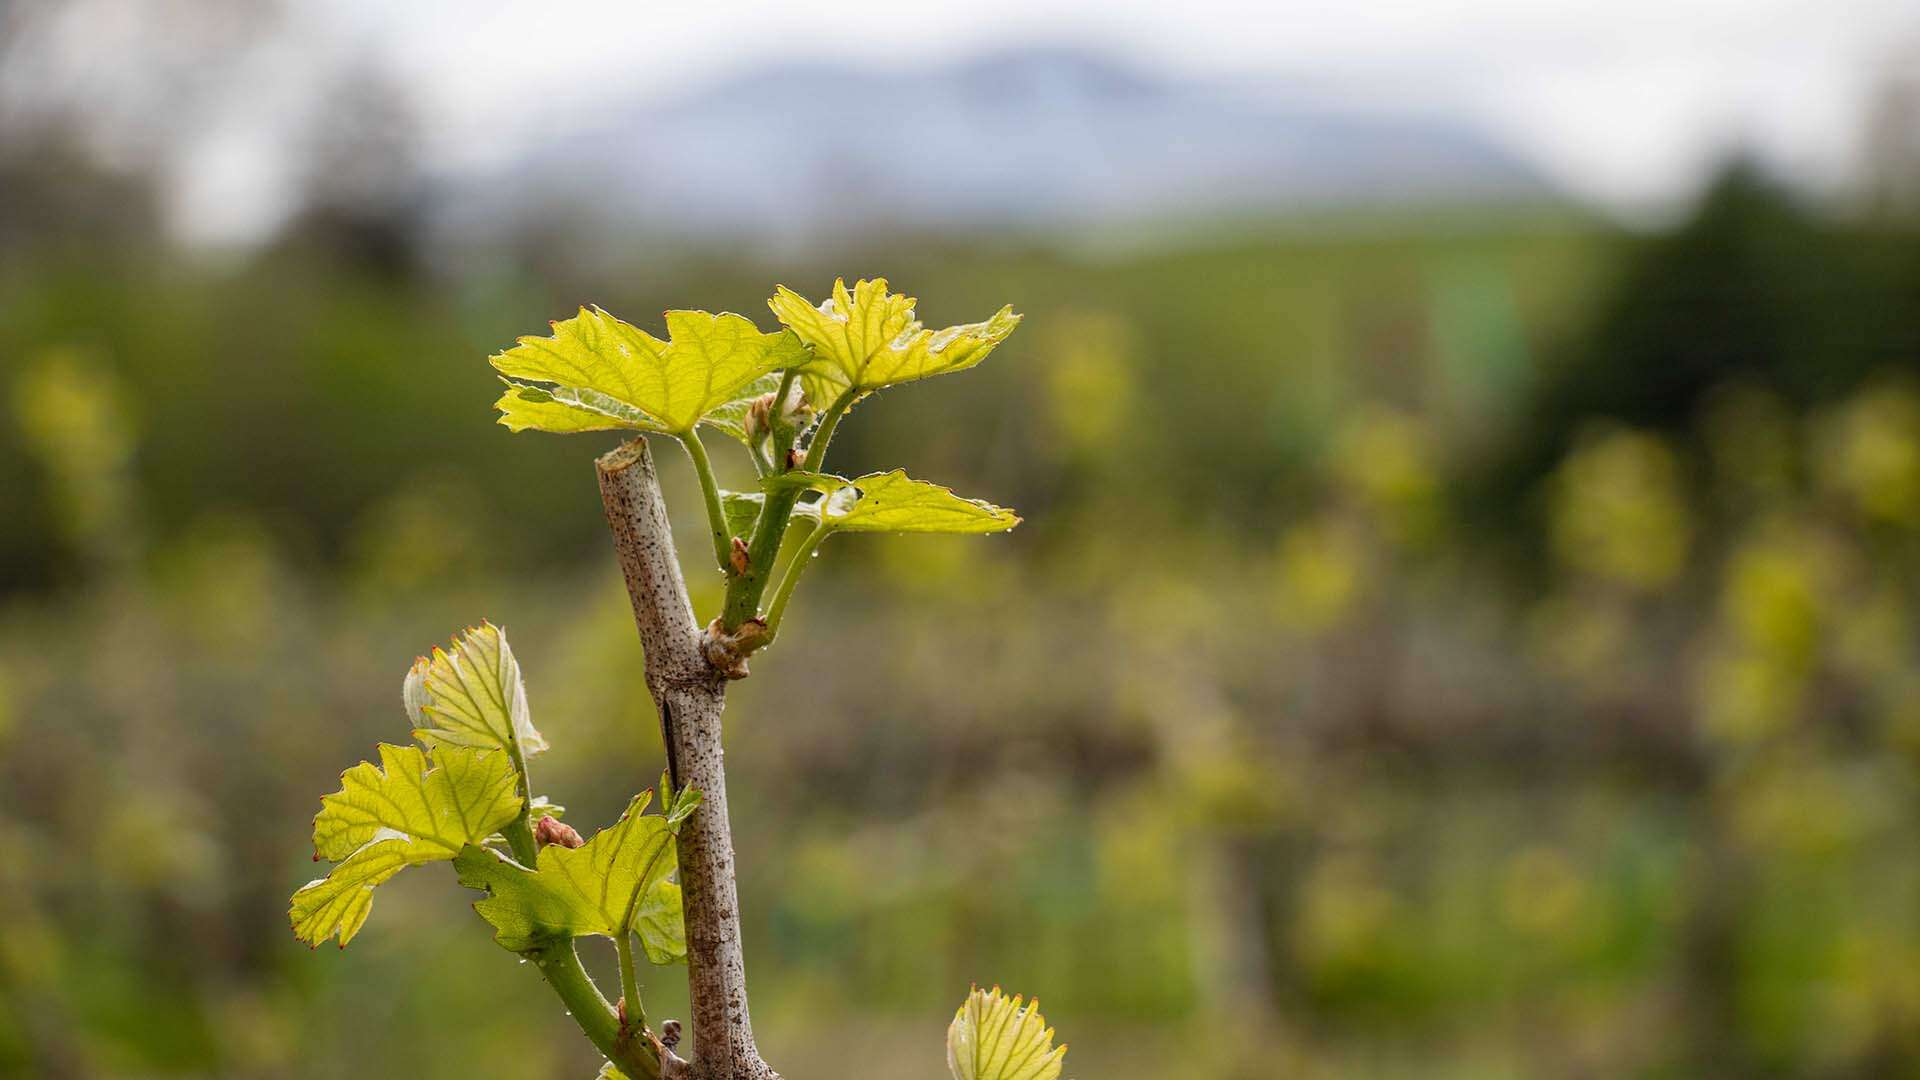 Spring Vineyard Growth